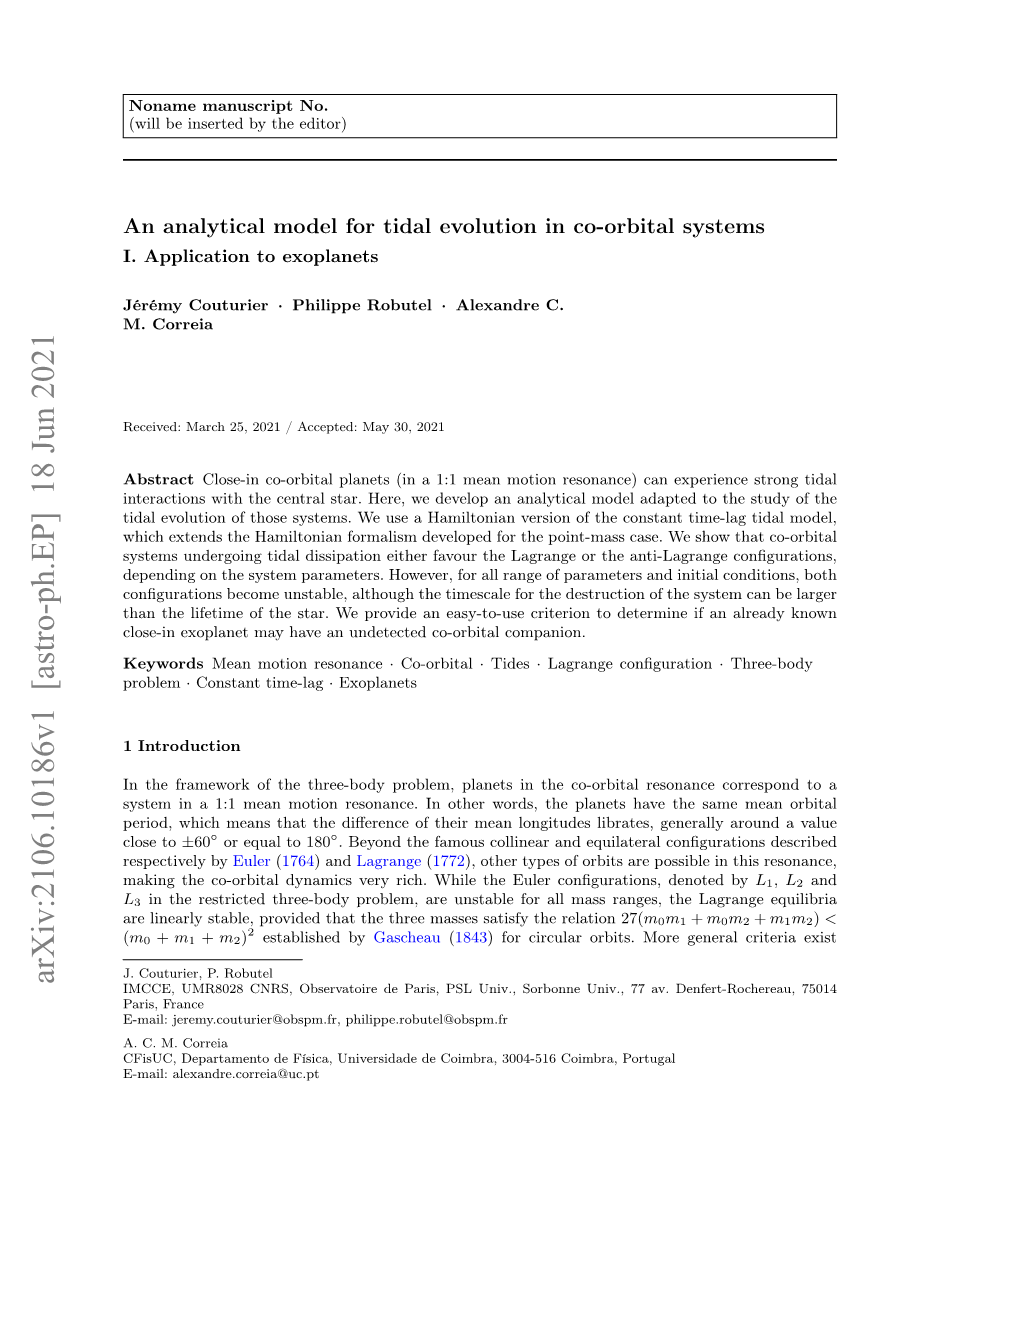 An Analytical Model for Tidal Evolution in Co-Orbital Systems $\, $ I